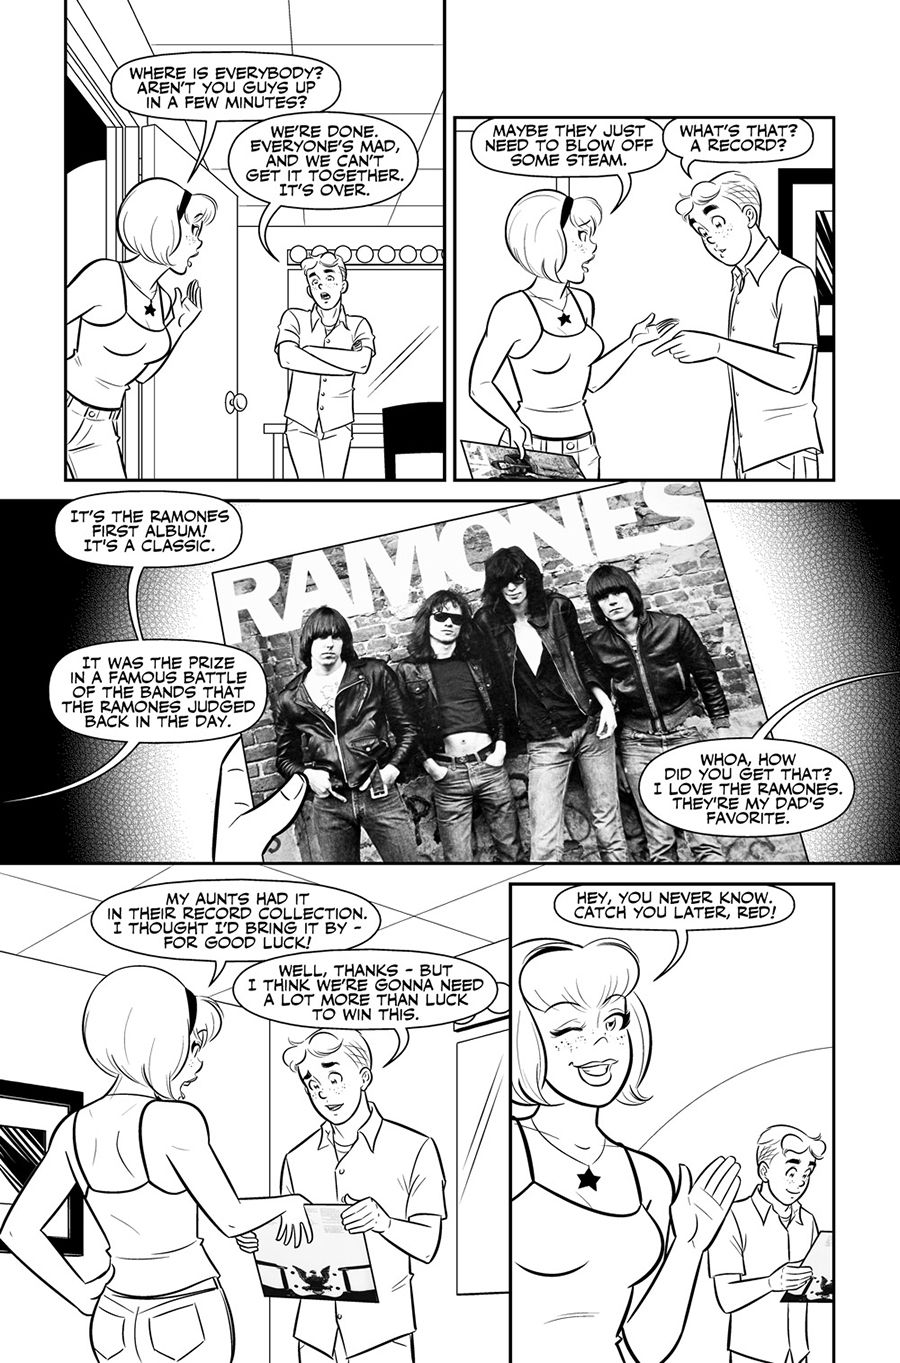 Archie-Meets-Ramones-One-Shot-pg04